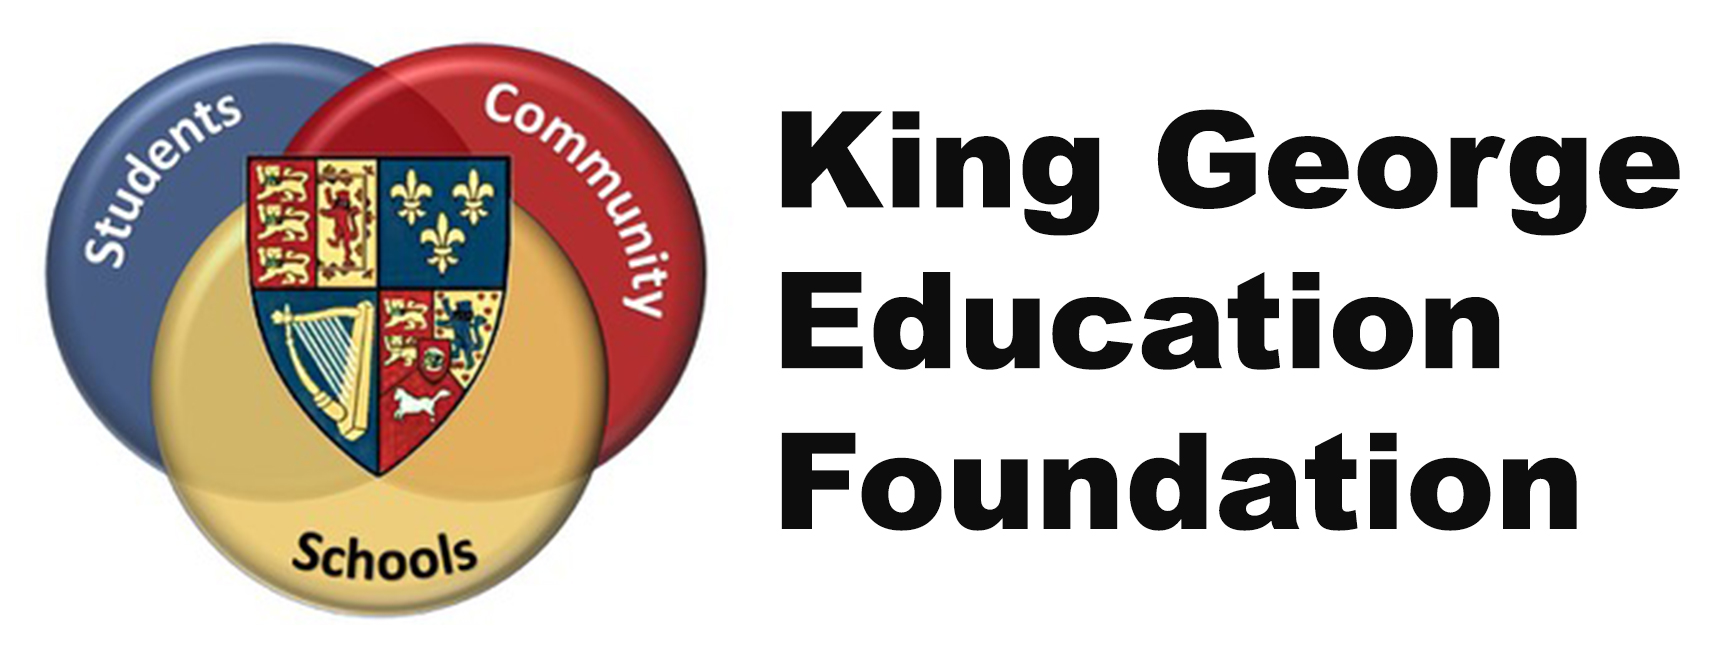 King George Education Foundation